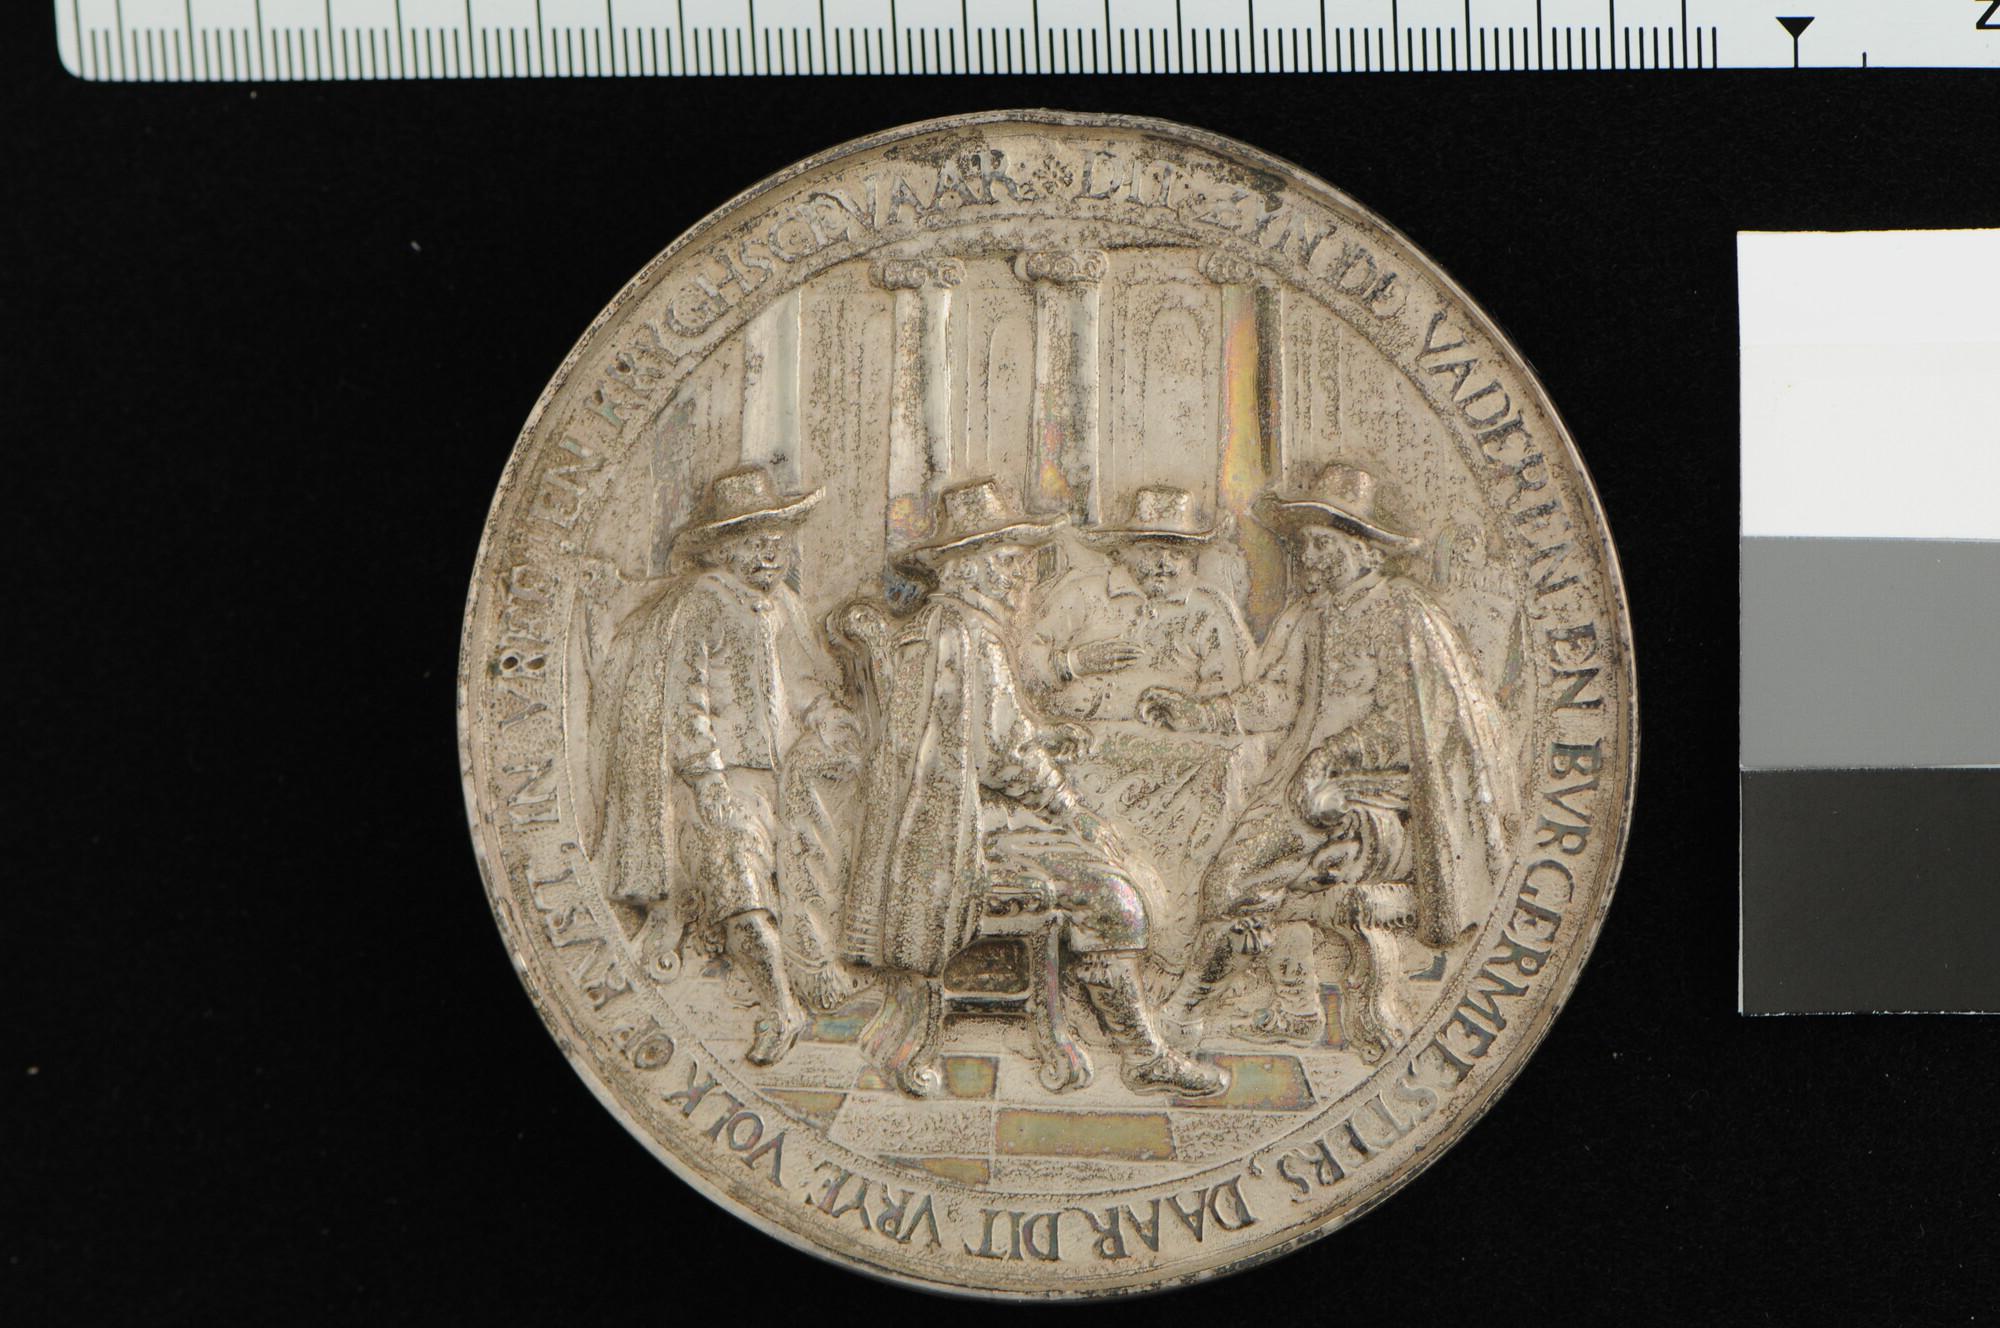 A.0023(122); Burgemeesterspenning geslagen ter ere van de Amsterdamse burgemeesters, 1655; penning